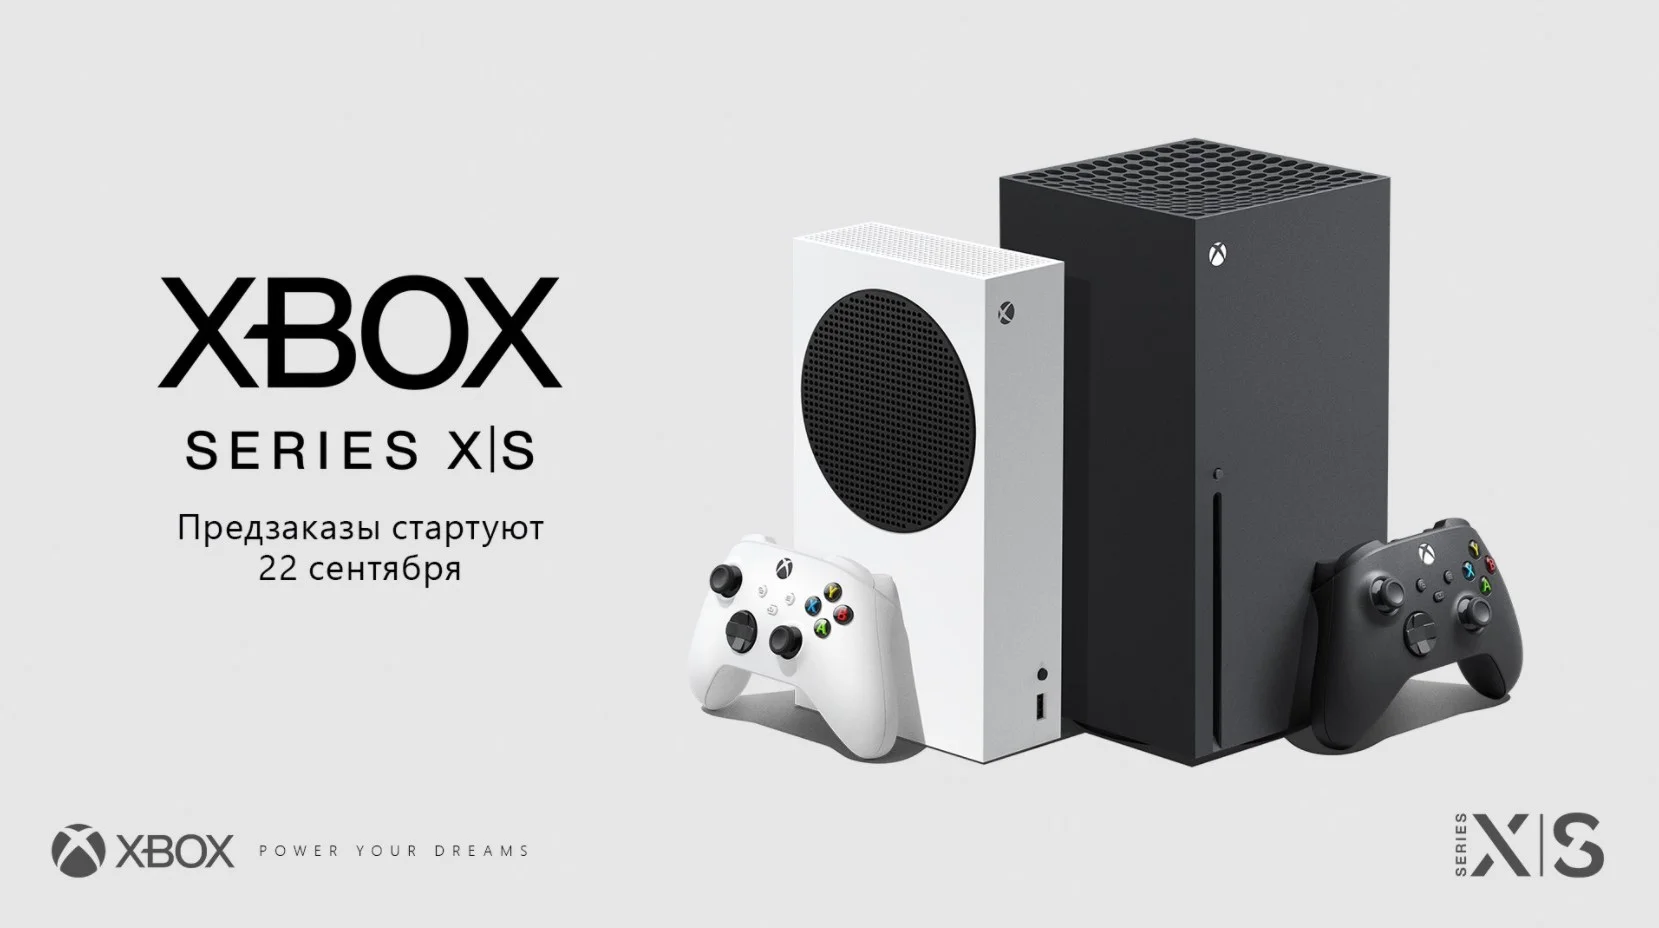 Когда в России стартуют предзаказы Xbox Series S и Xbox Series X - фото 1